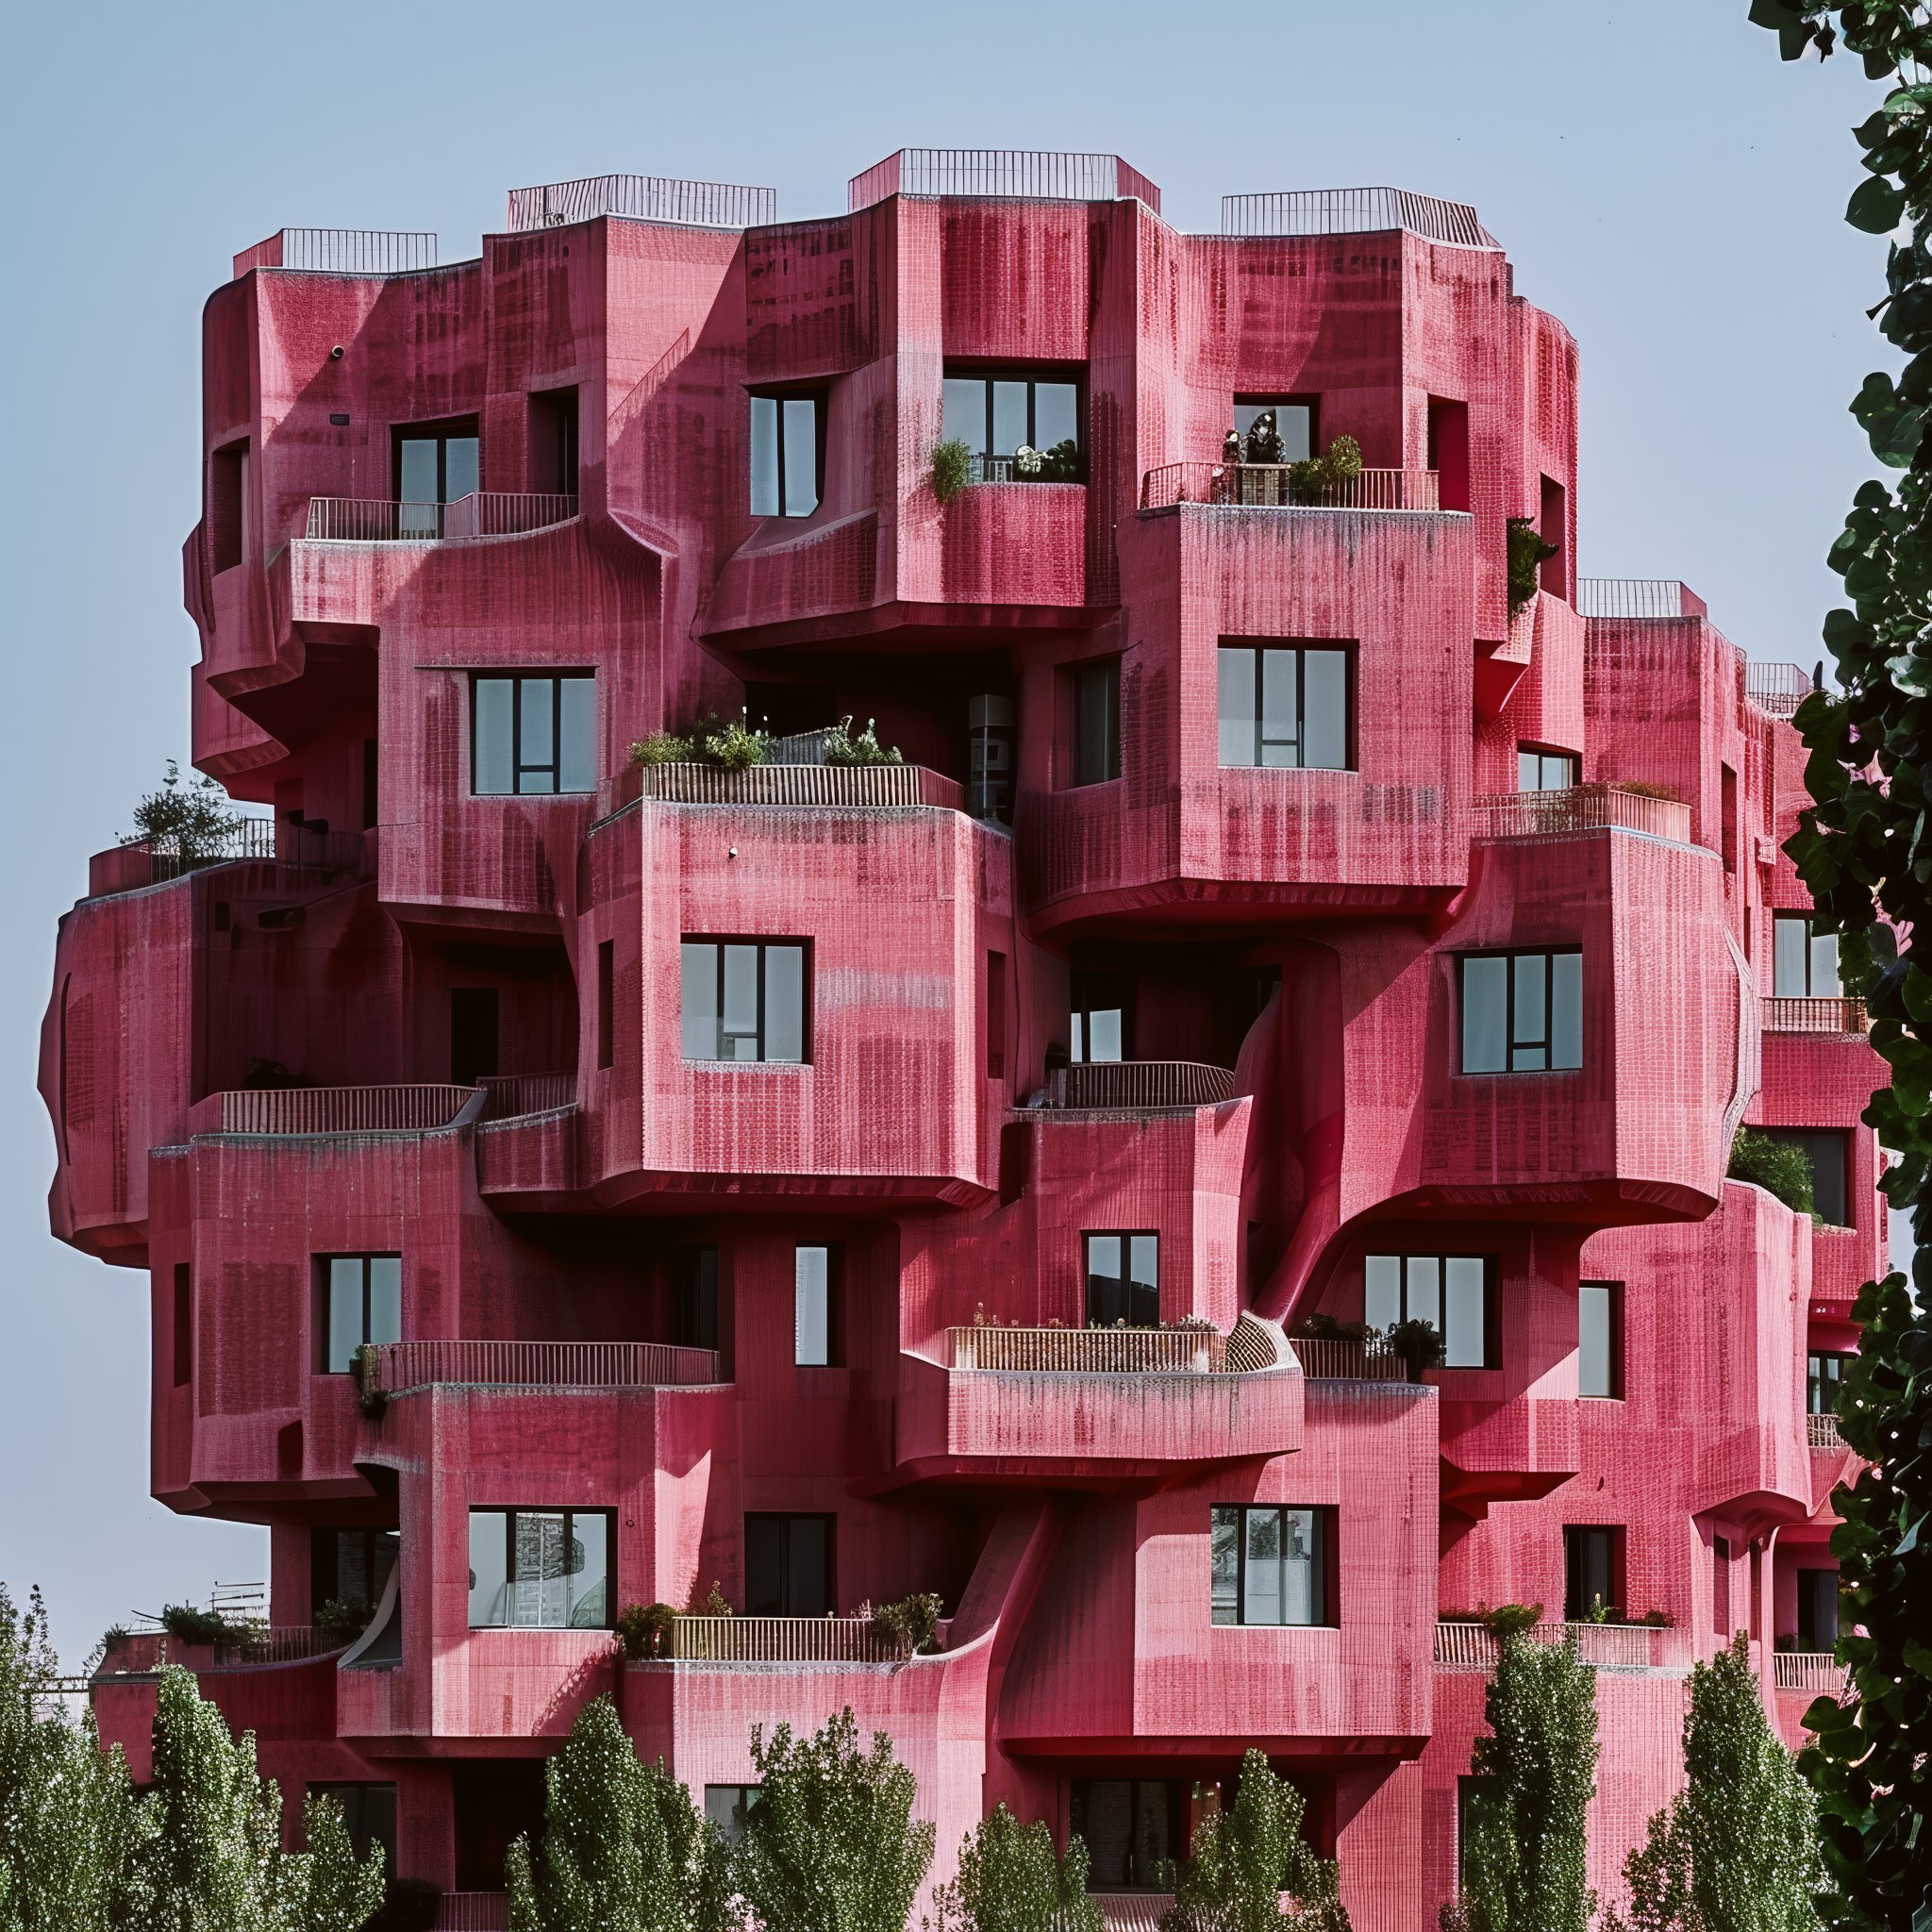 It's Pink ! 🦩
.
.
 #midjourney #midjourneyai #midjourneyart #midjourneyarchitecture  #architecturelovers #architectureinspiration #architecturaldesign #aiarchitecture #architecture